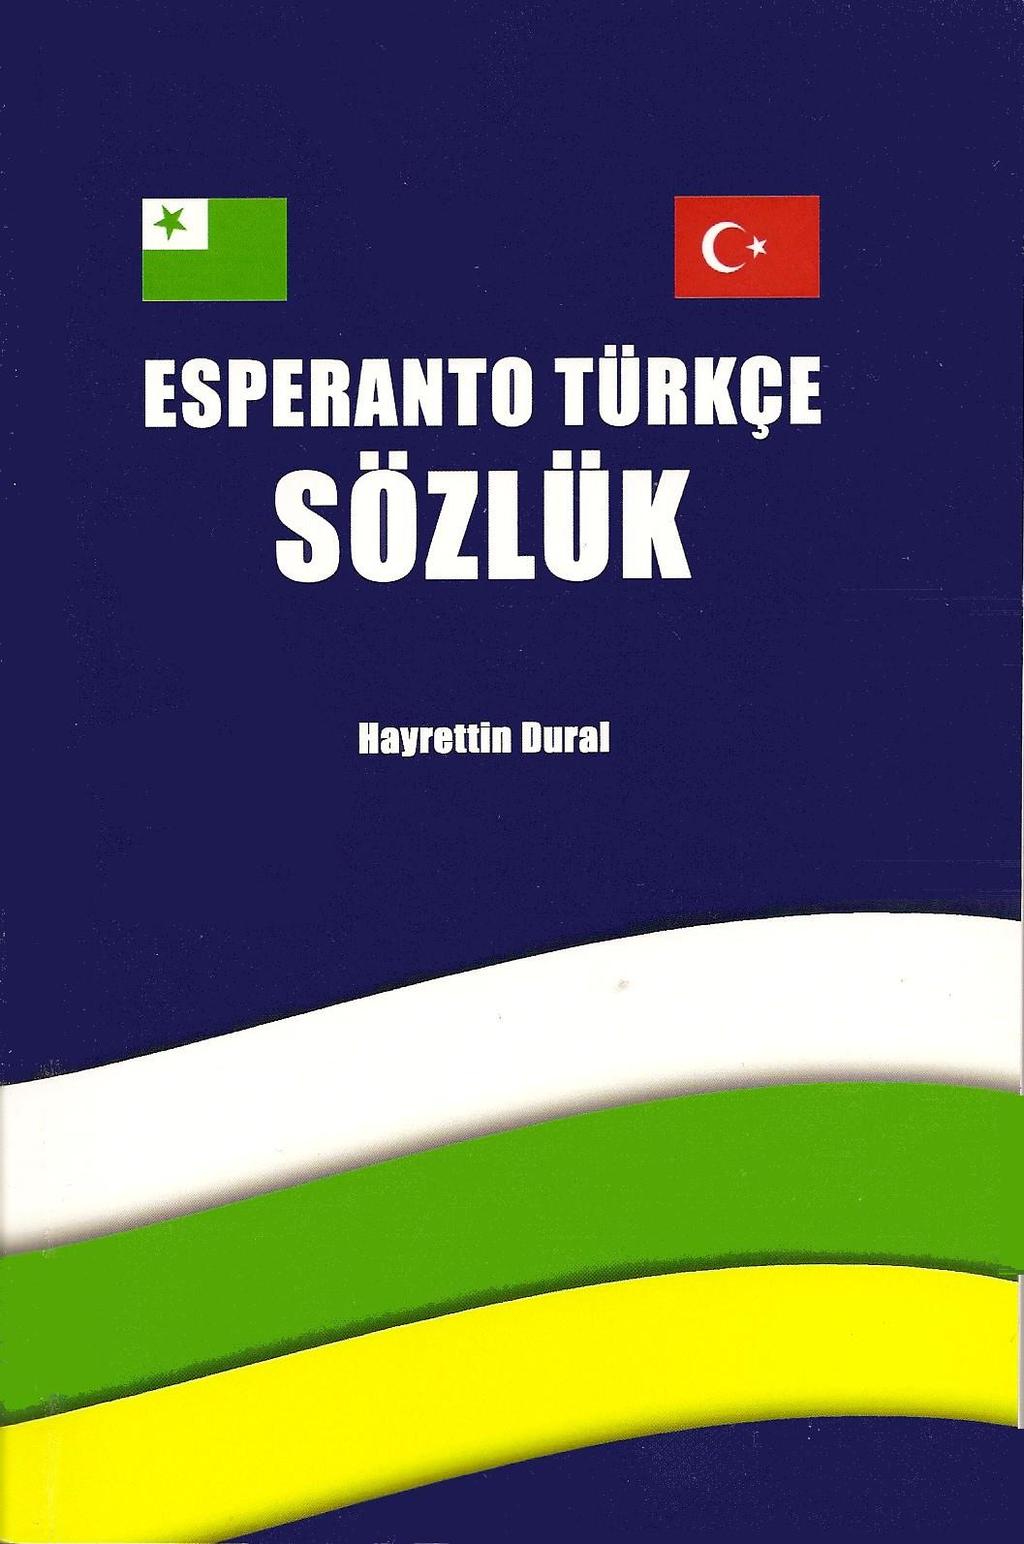 Esperanto Turkce Sozluk Pdf Free Download